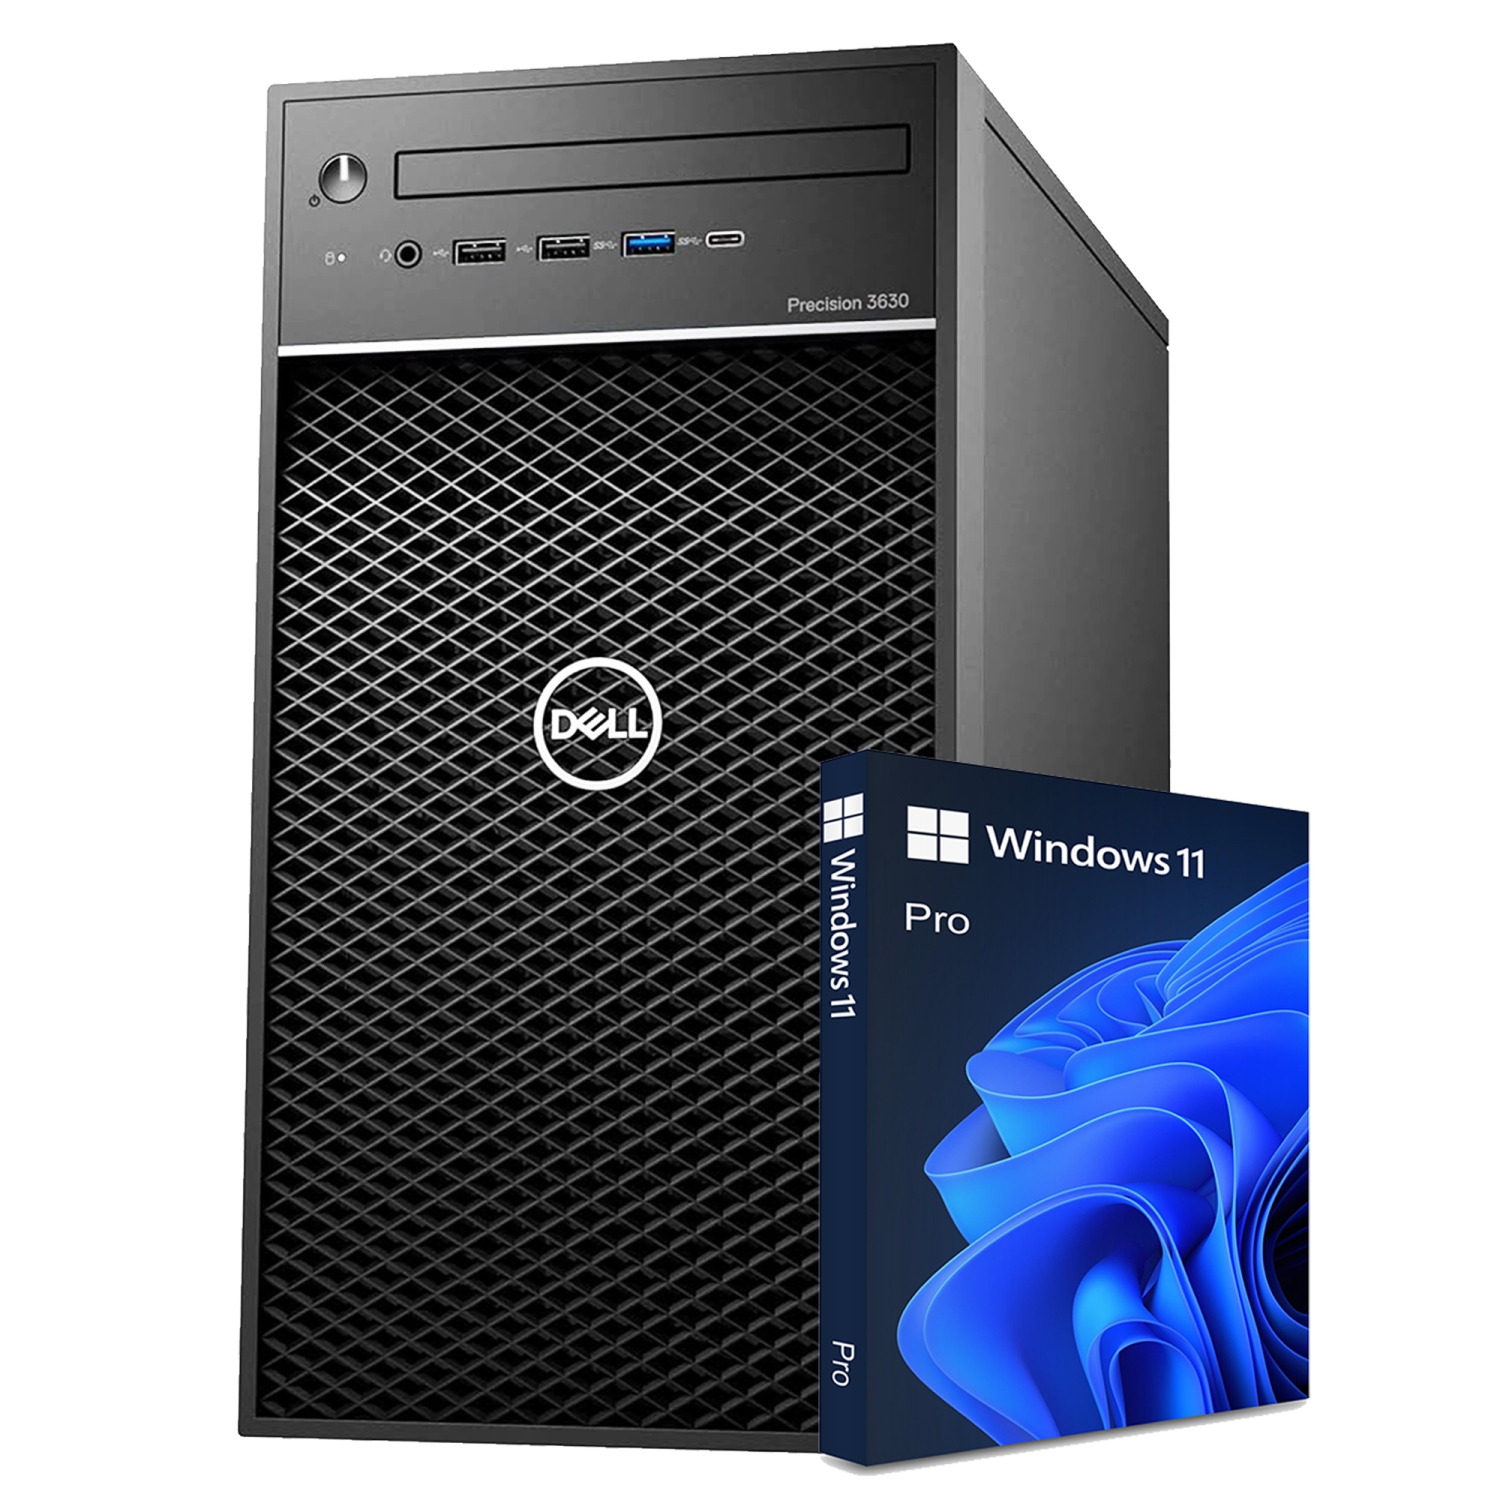 Refurbished (Good) - Dell Computer Precision 3630 Tower Desktop PC| Intel Core i7 8th Gen Processor| 32GB RAM| 1TB (Fast Boot) SSD| Windows 11 Pro| RGB Keyboard and Mouse| WIFI